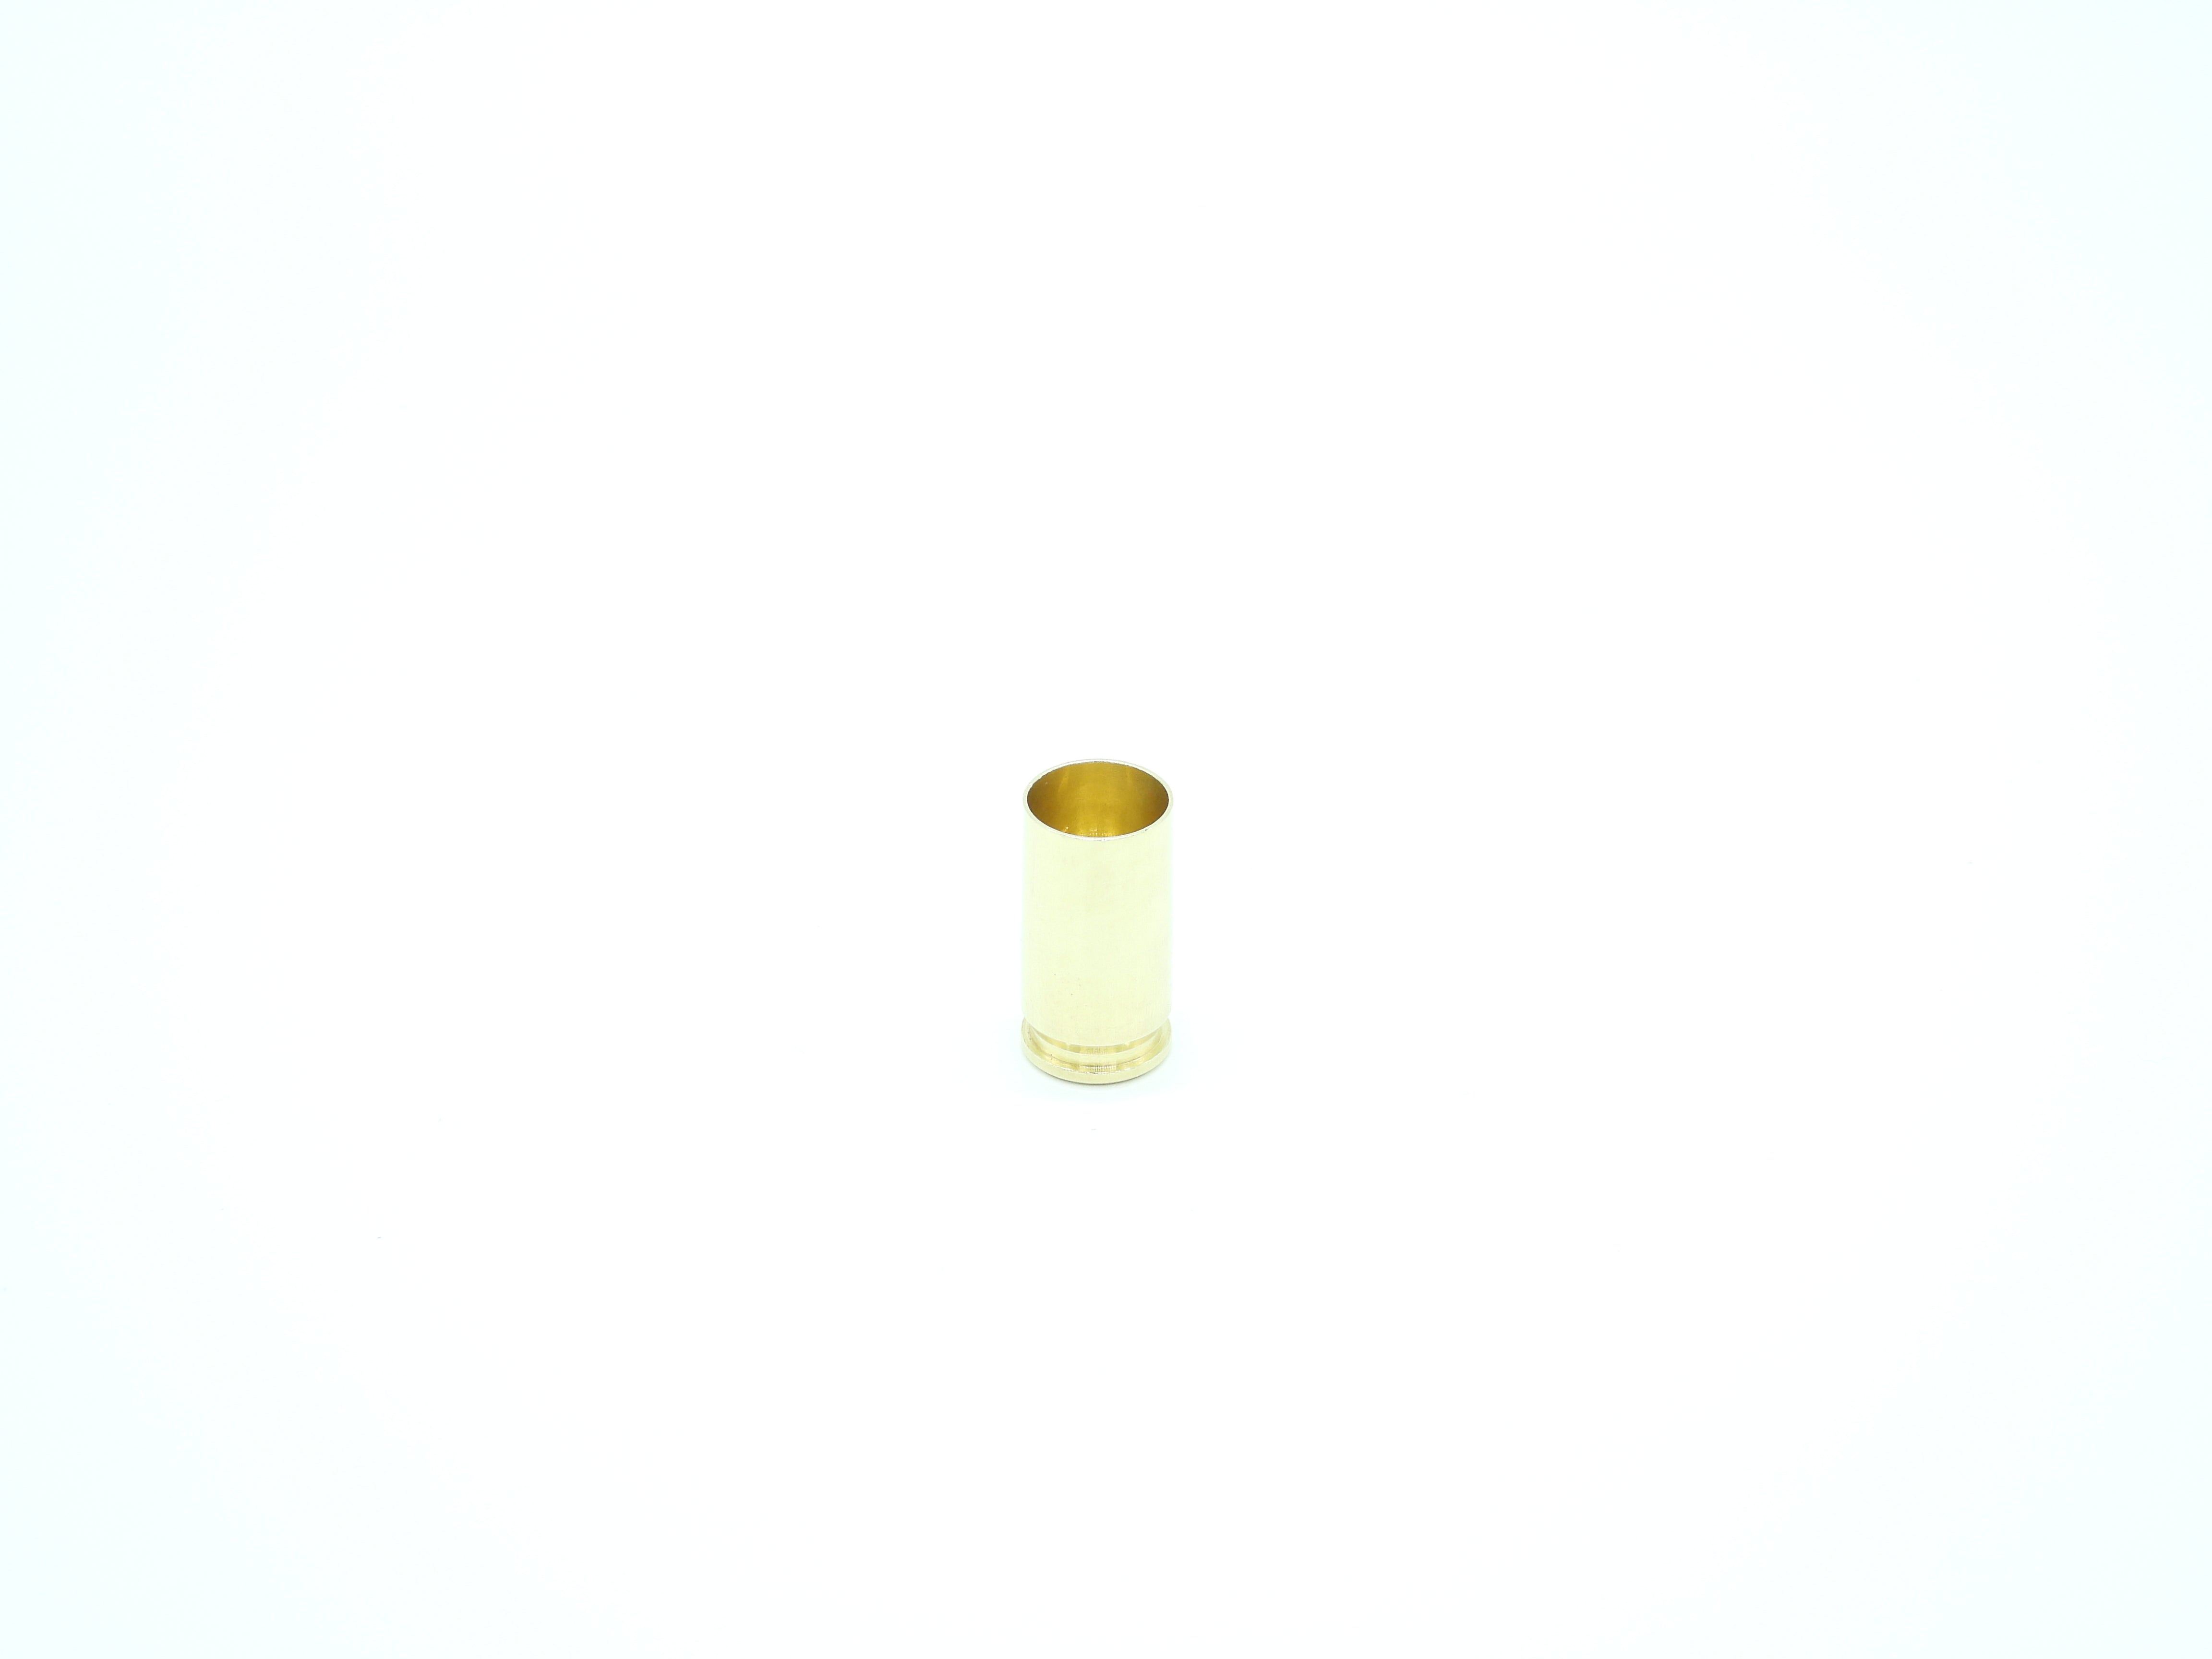 9 mm Primed Brass Shellcase